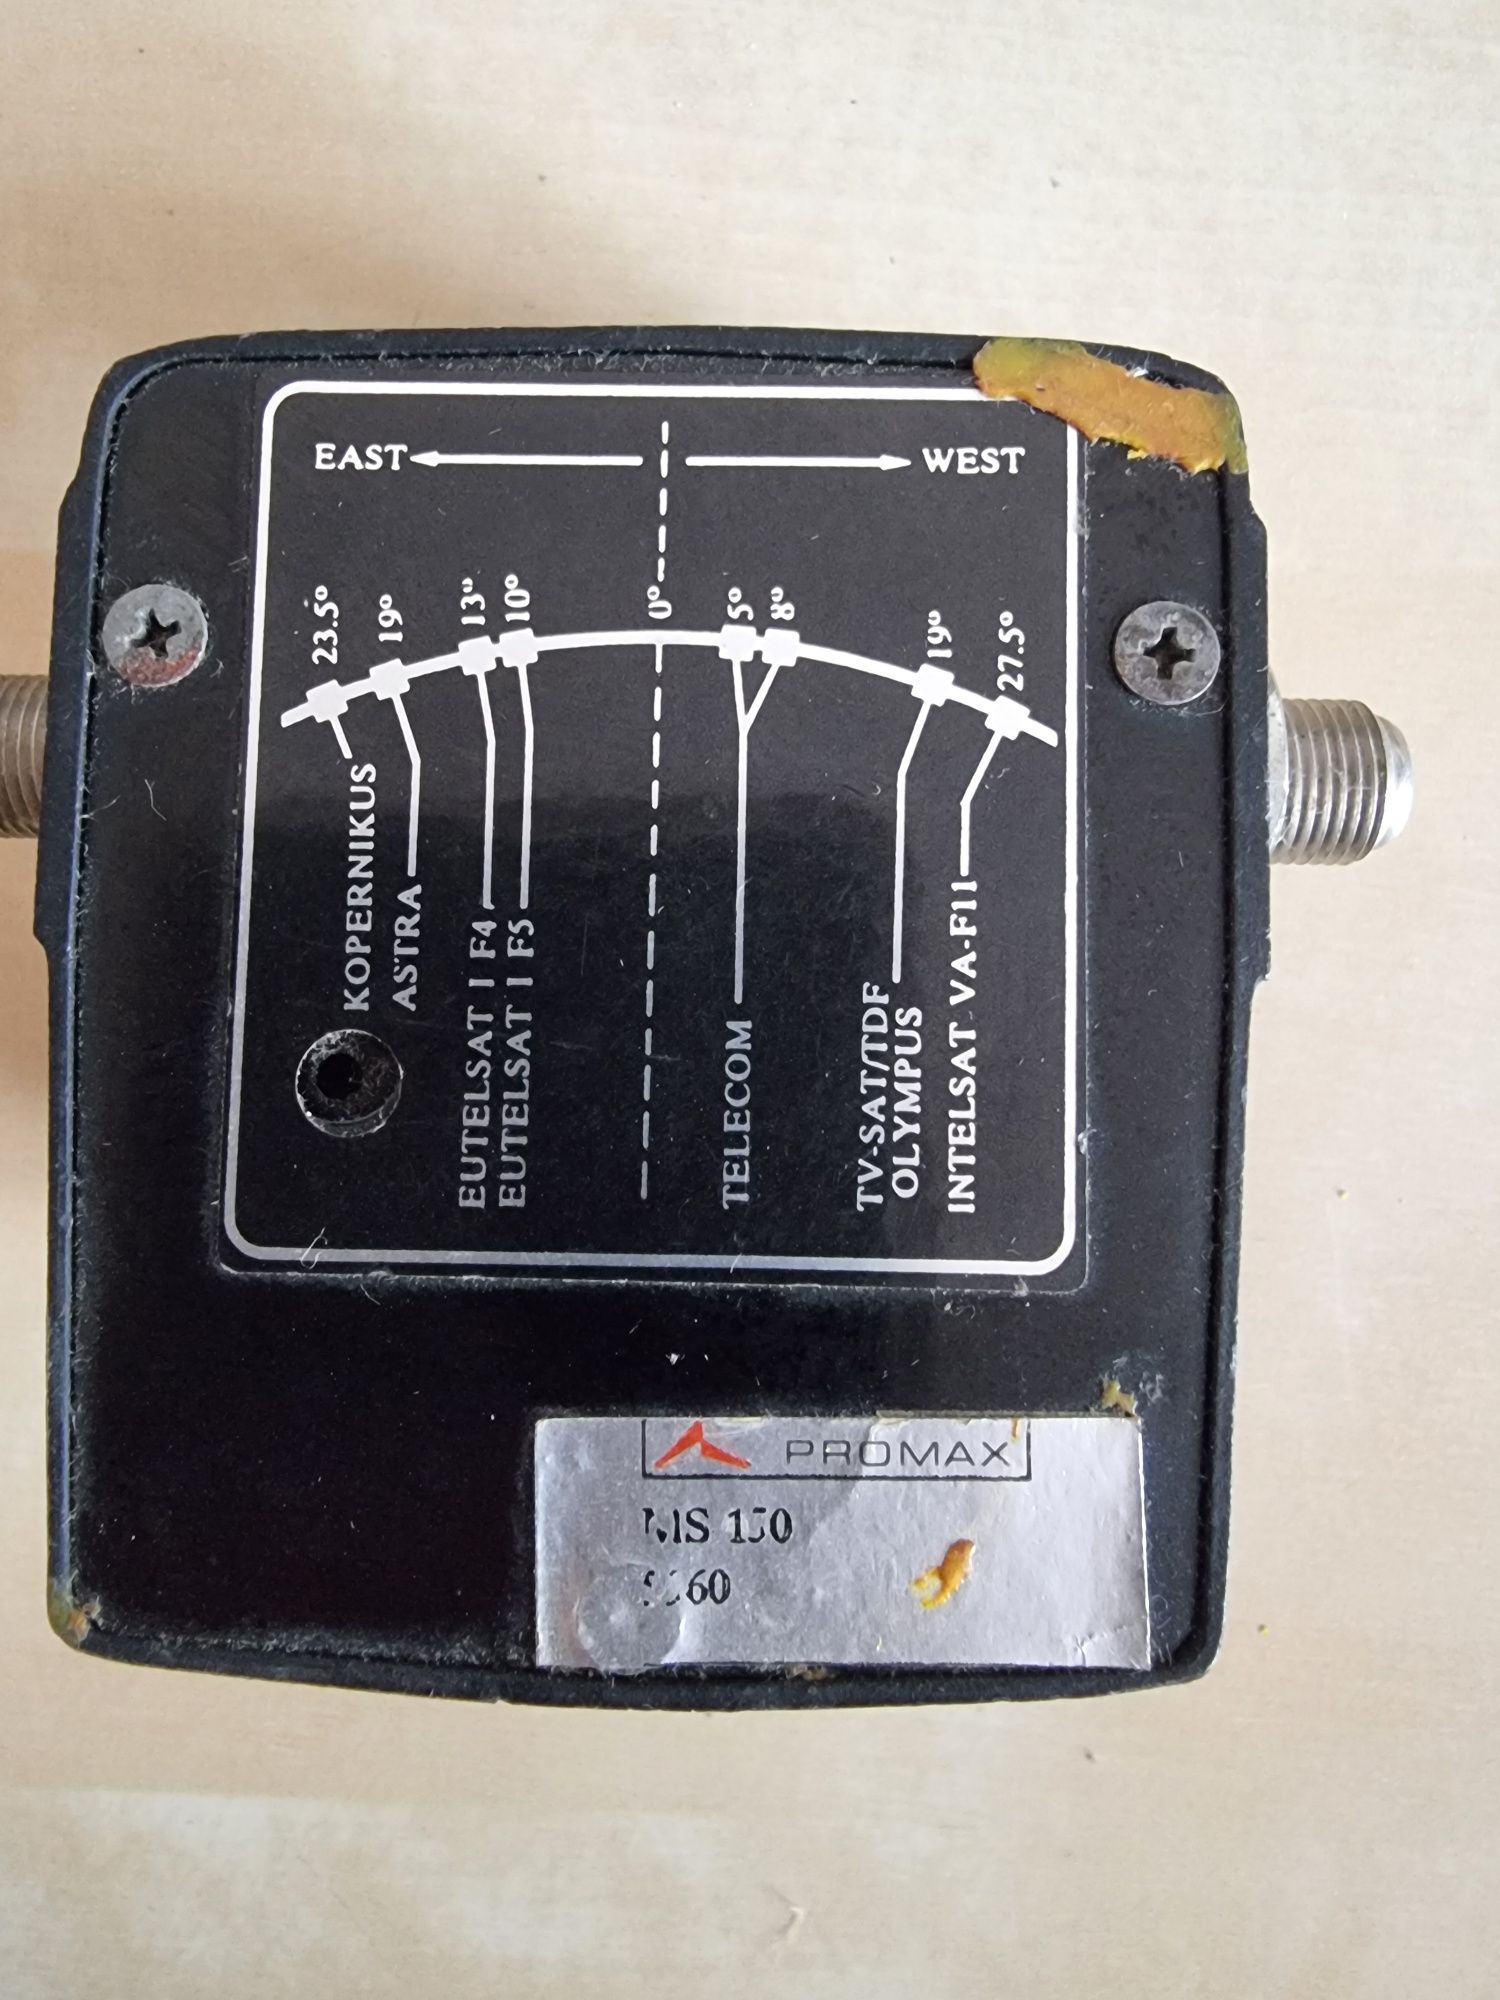 Medidor de sinal de satélite promax ms 150